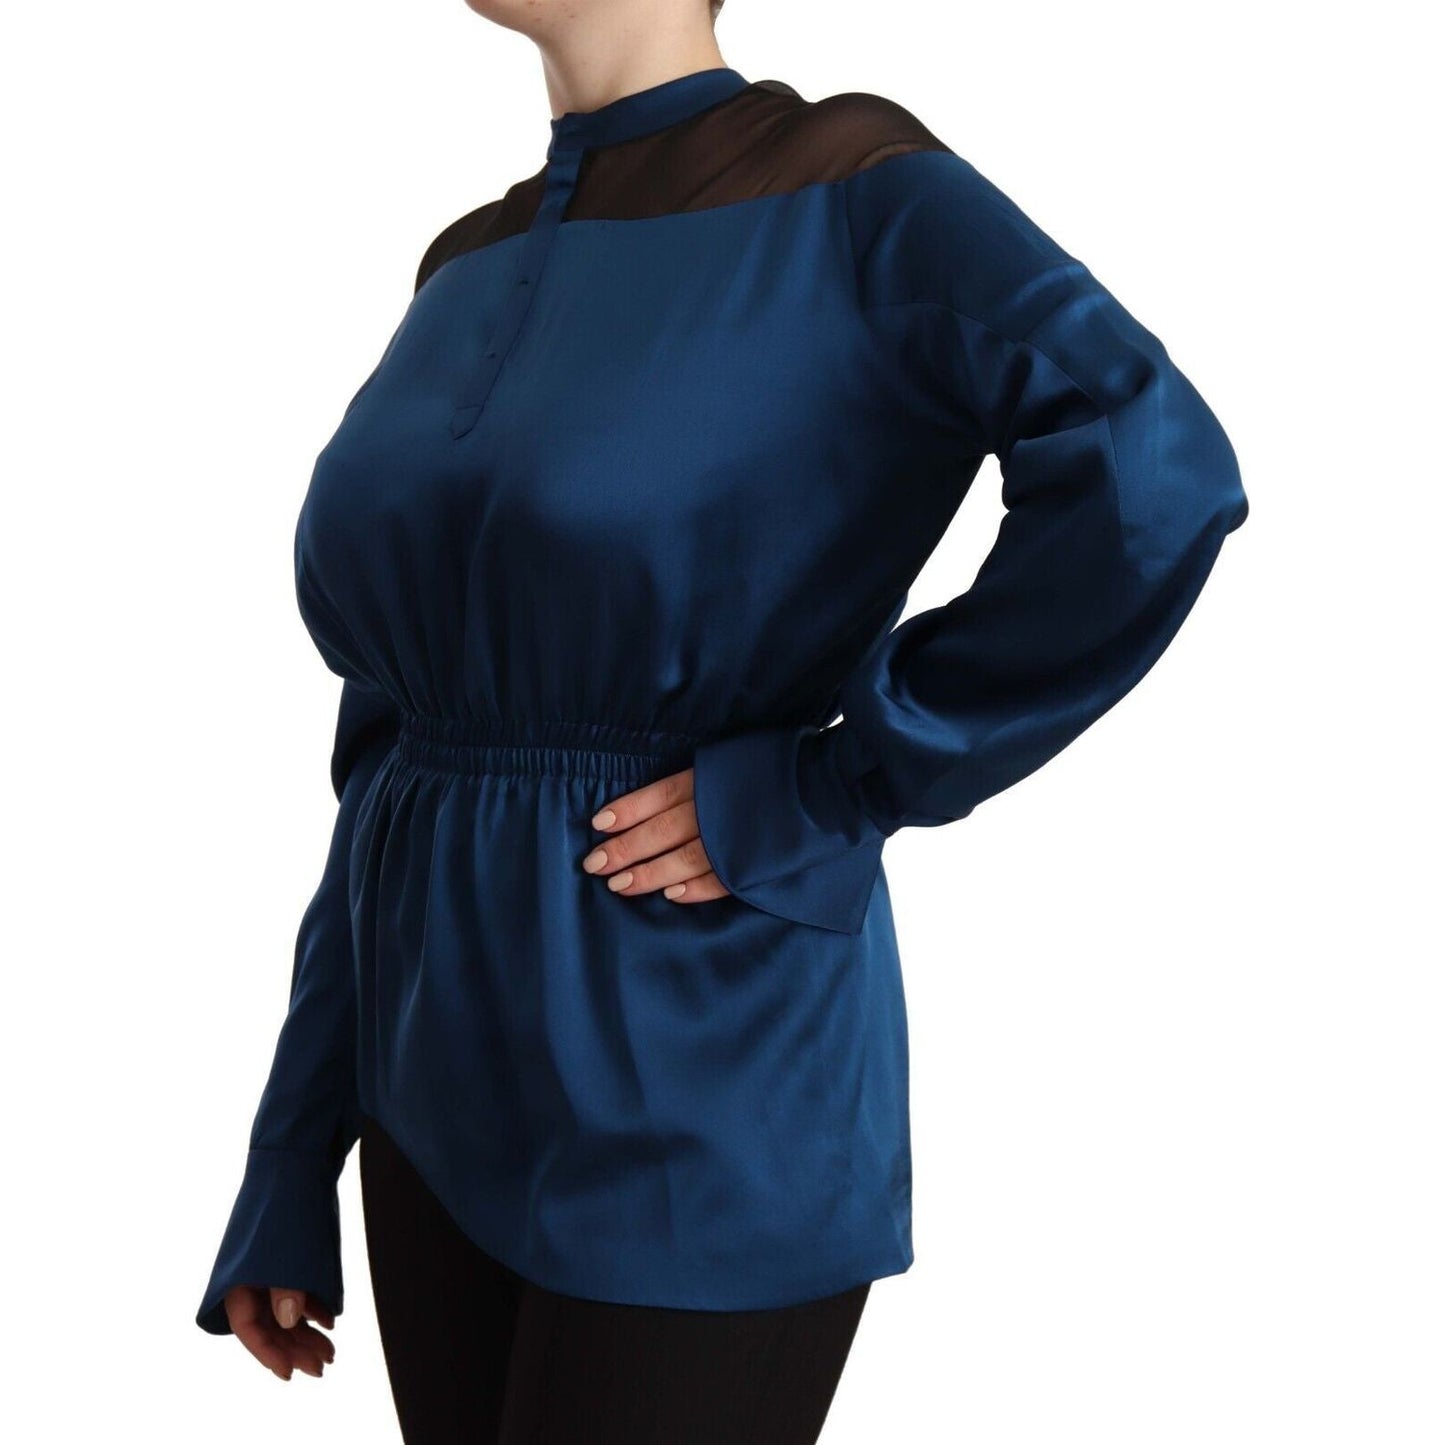 Masha Ma Elegant Crew Neck Silk Blouse in Blue WOMAN TOPS AND SHIRTS blue-silk-long-sleeves-elastic-waist-top-blouse s-l1600-1-28-5822fd01-d85.jpg